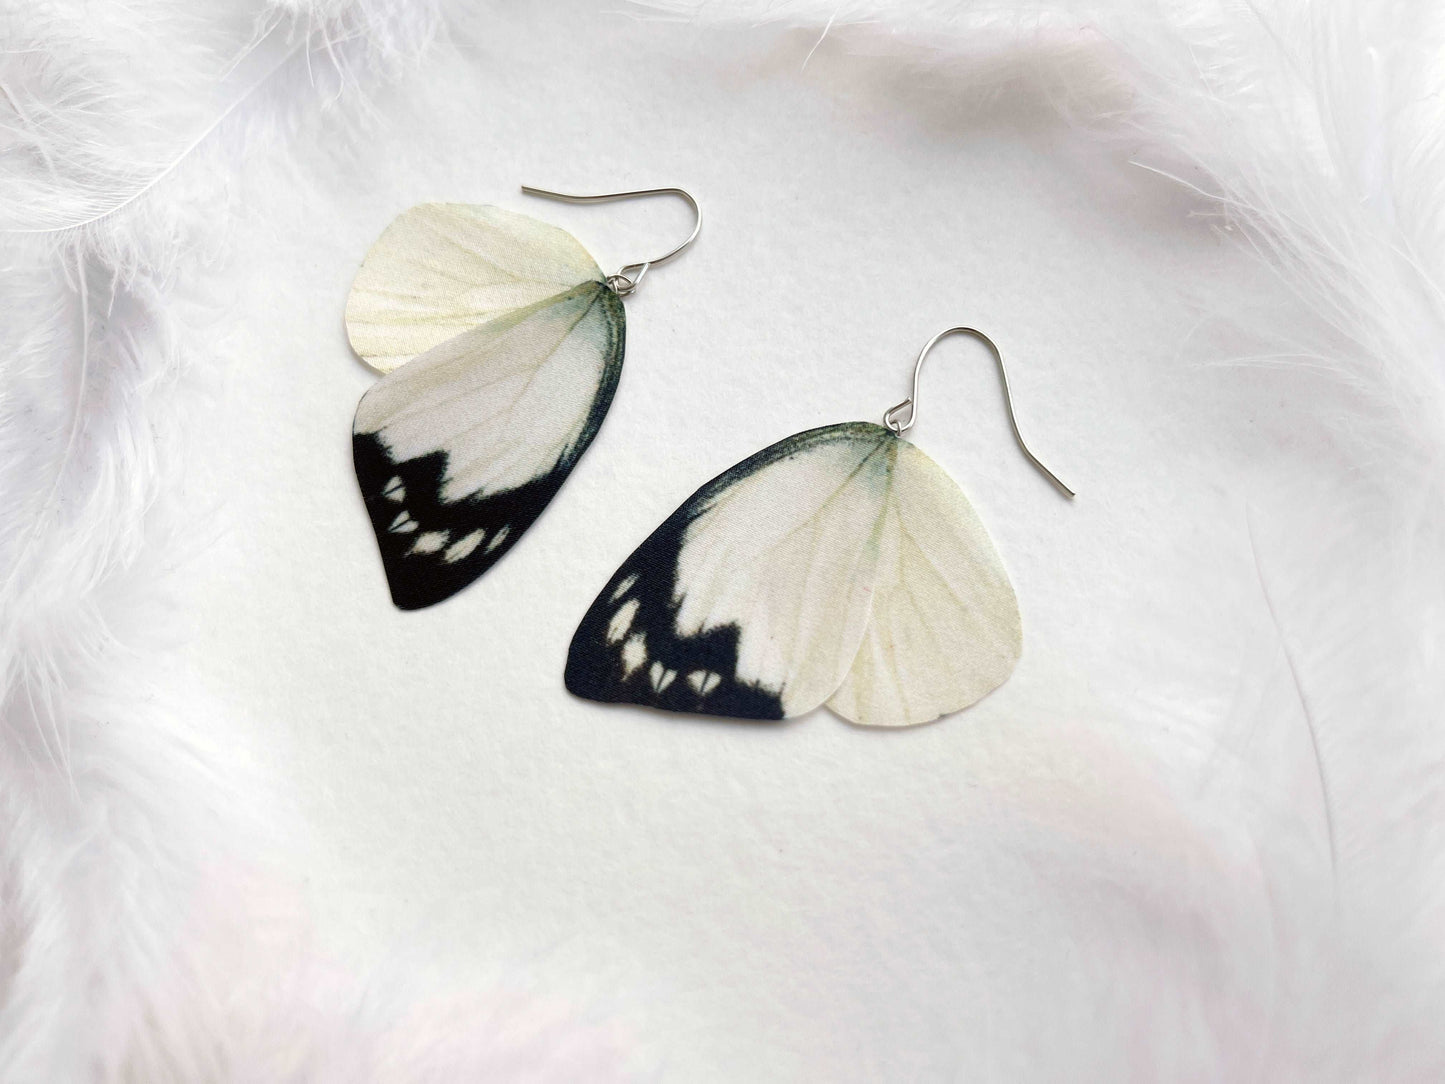 Ivory wing earrings for butterfly lovers